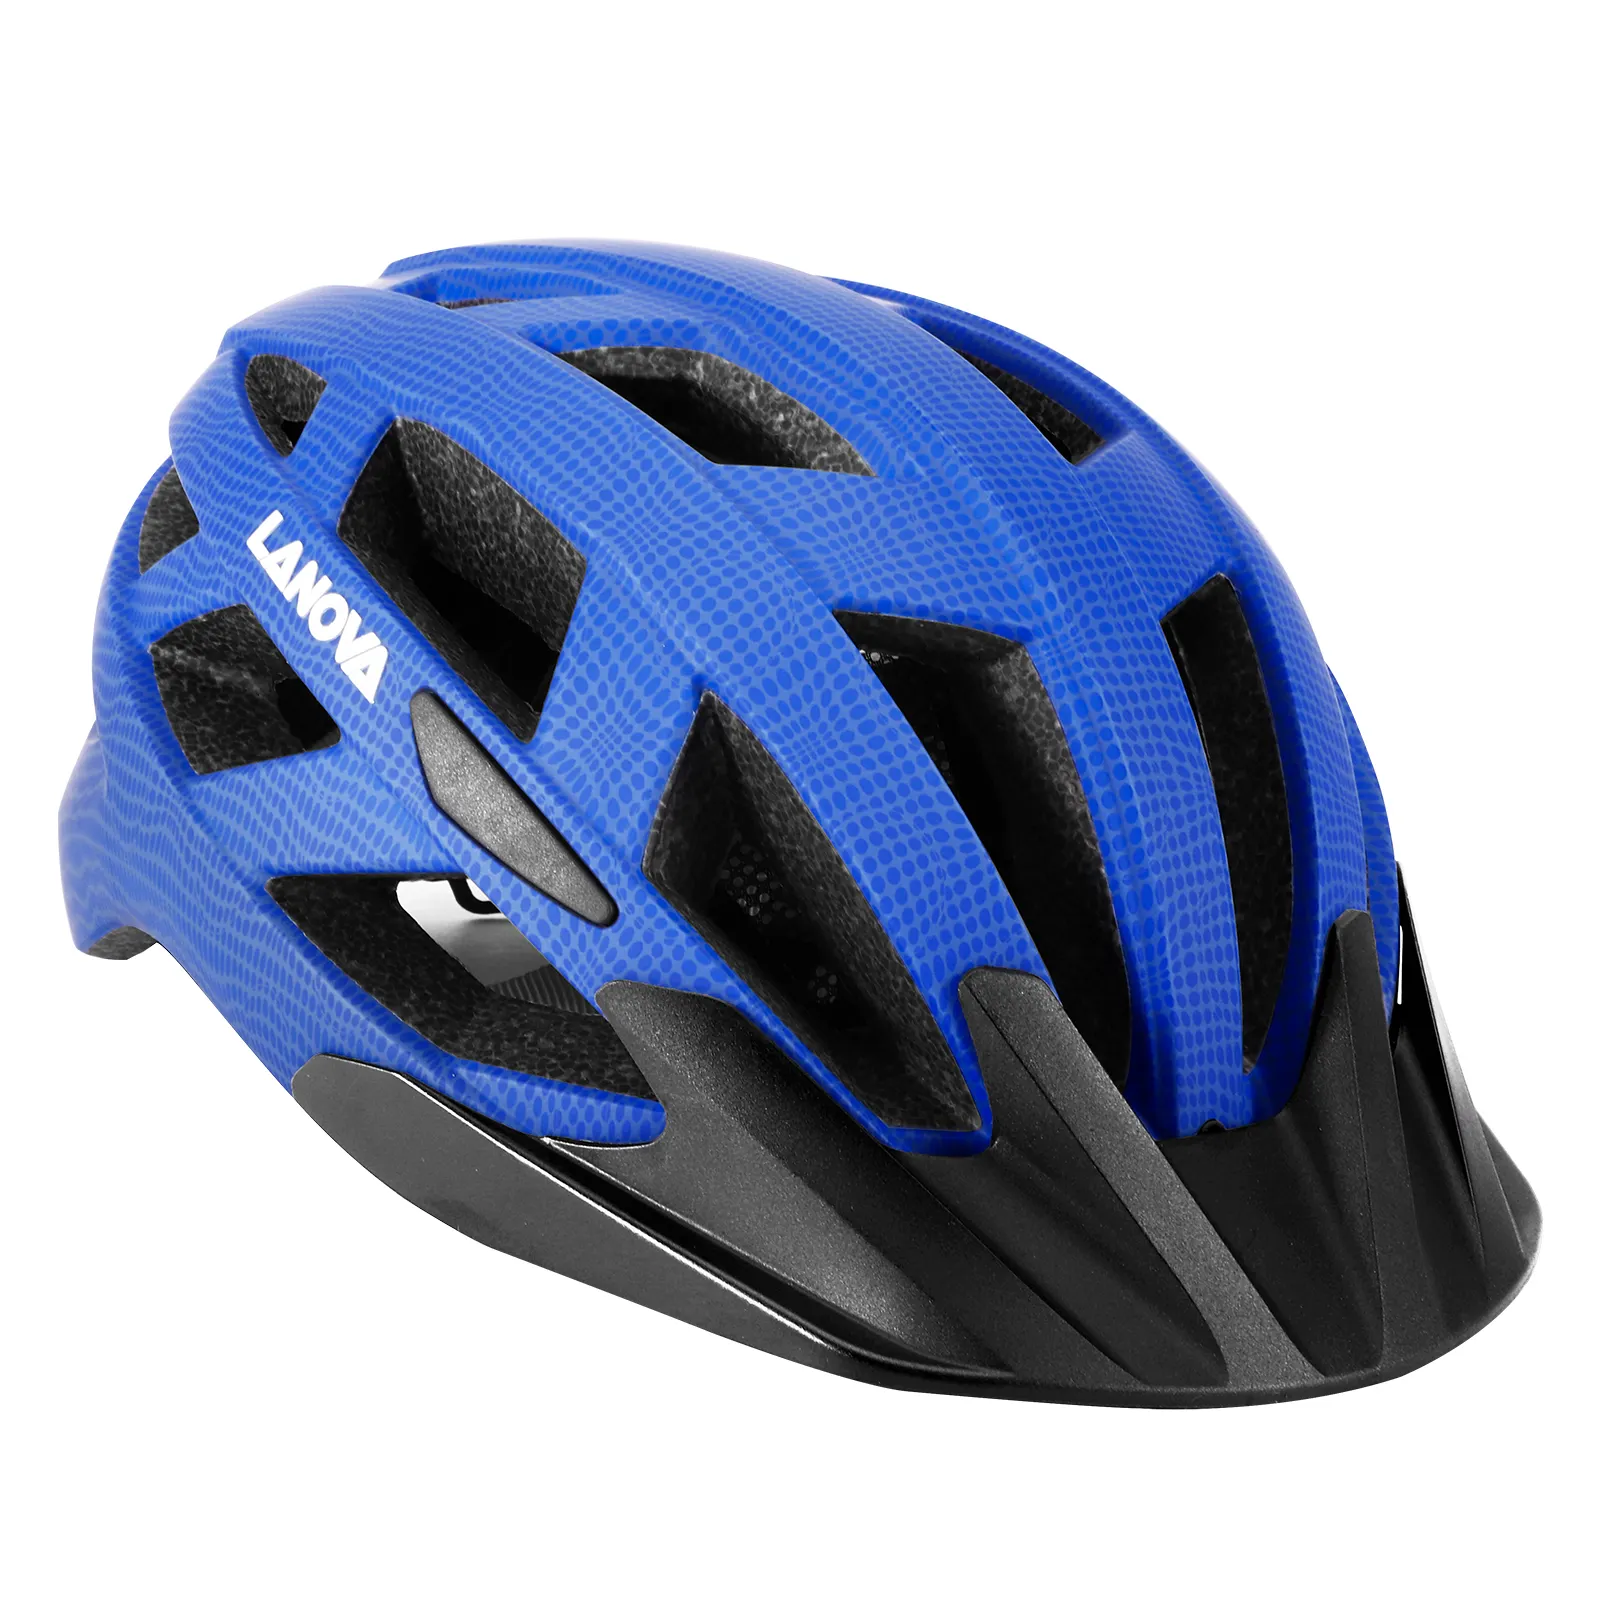 Casco de Ciclismo de mayor calidad para luces T con casco de visera patines ajustables cascos de bicicleta